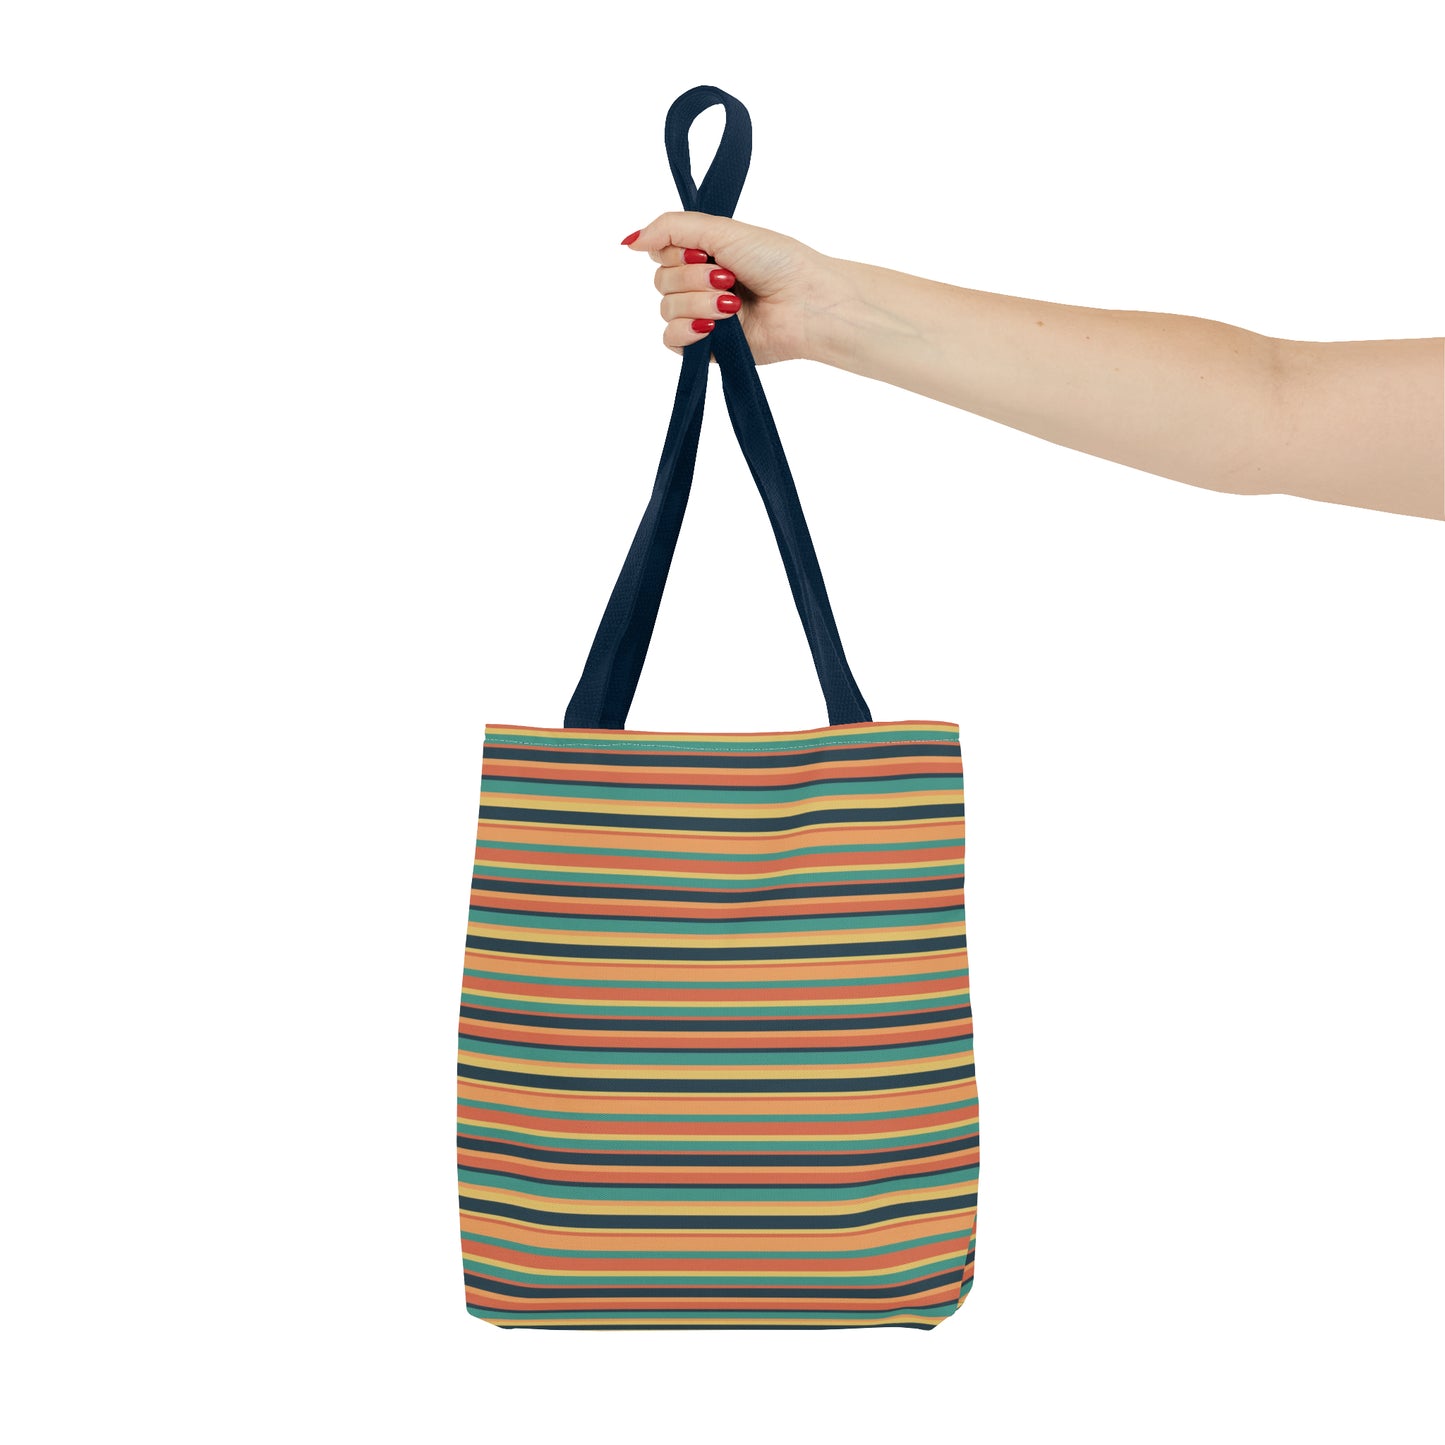 Sunbaked Stripes Tote Bag